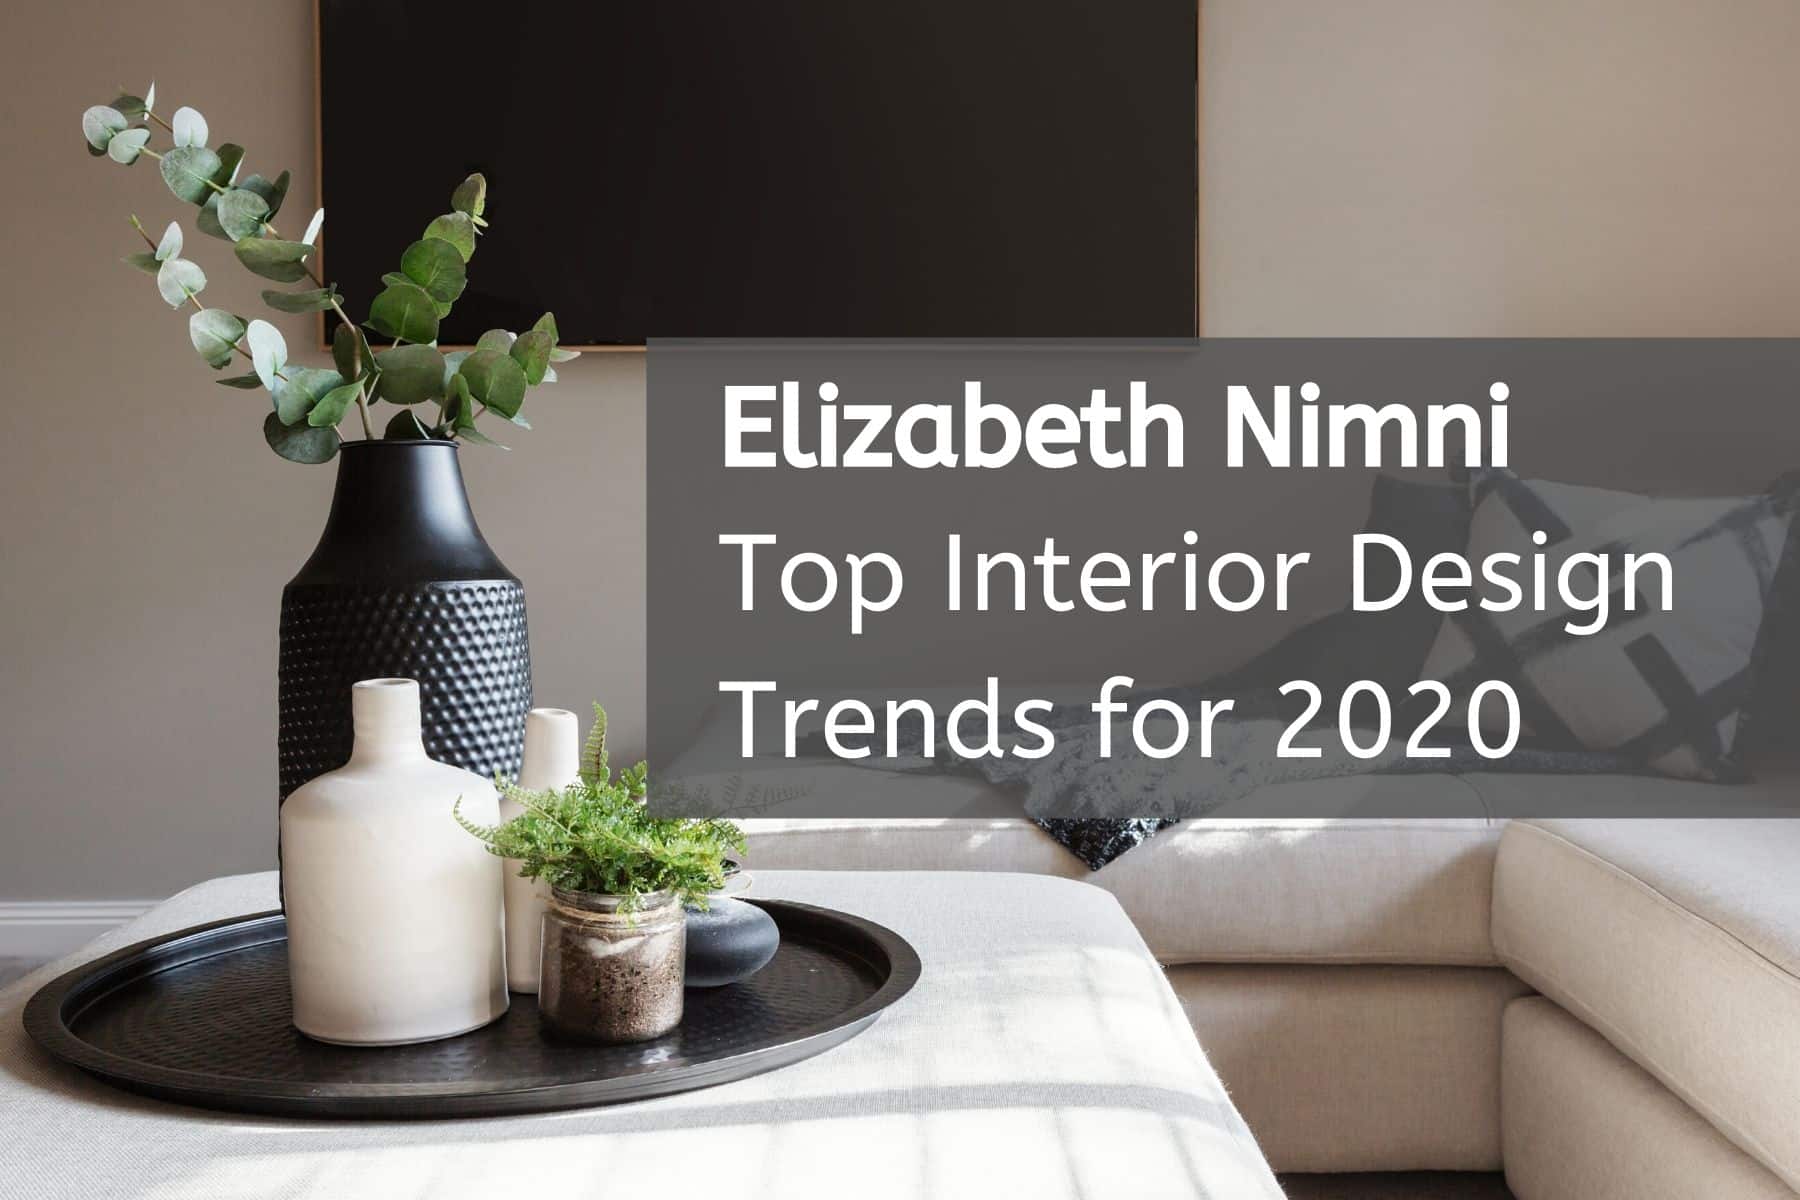 Elizabeth Nimni to Highlight Top Interior Design Trends for 2020